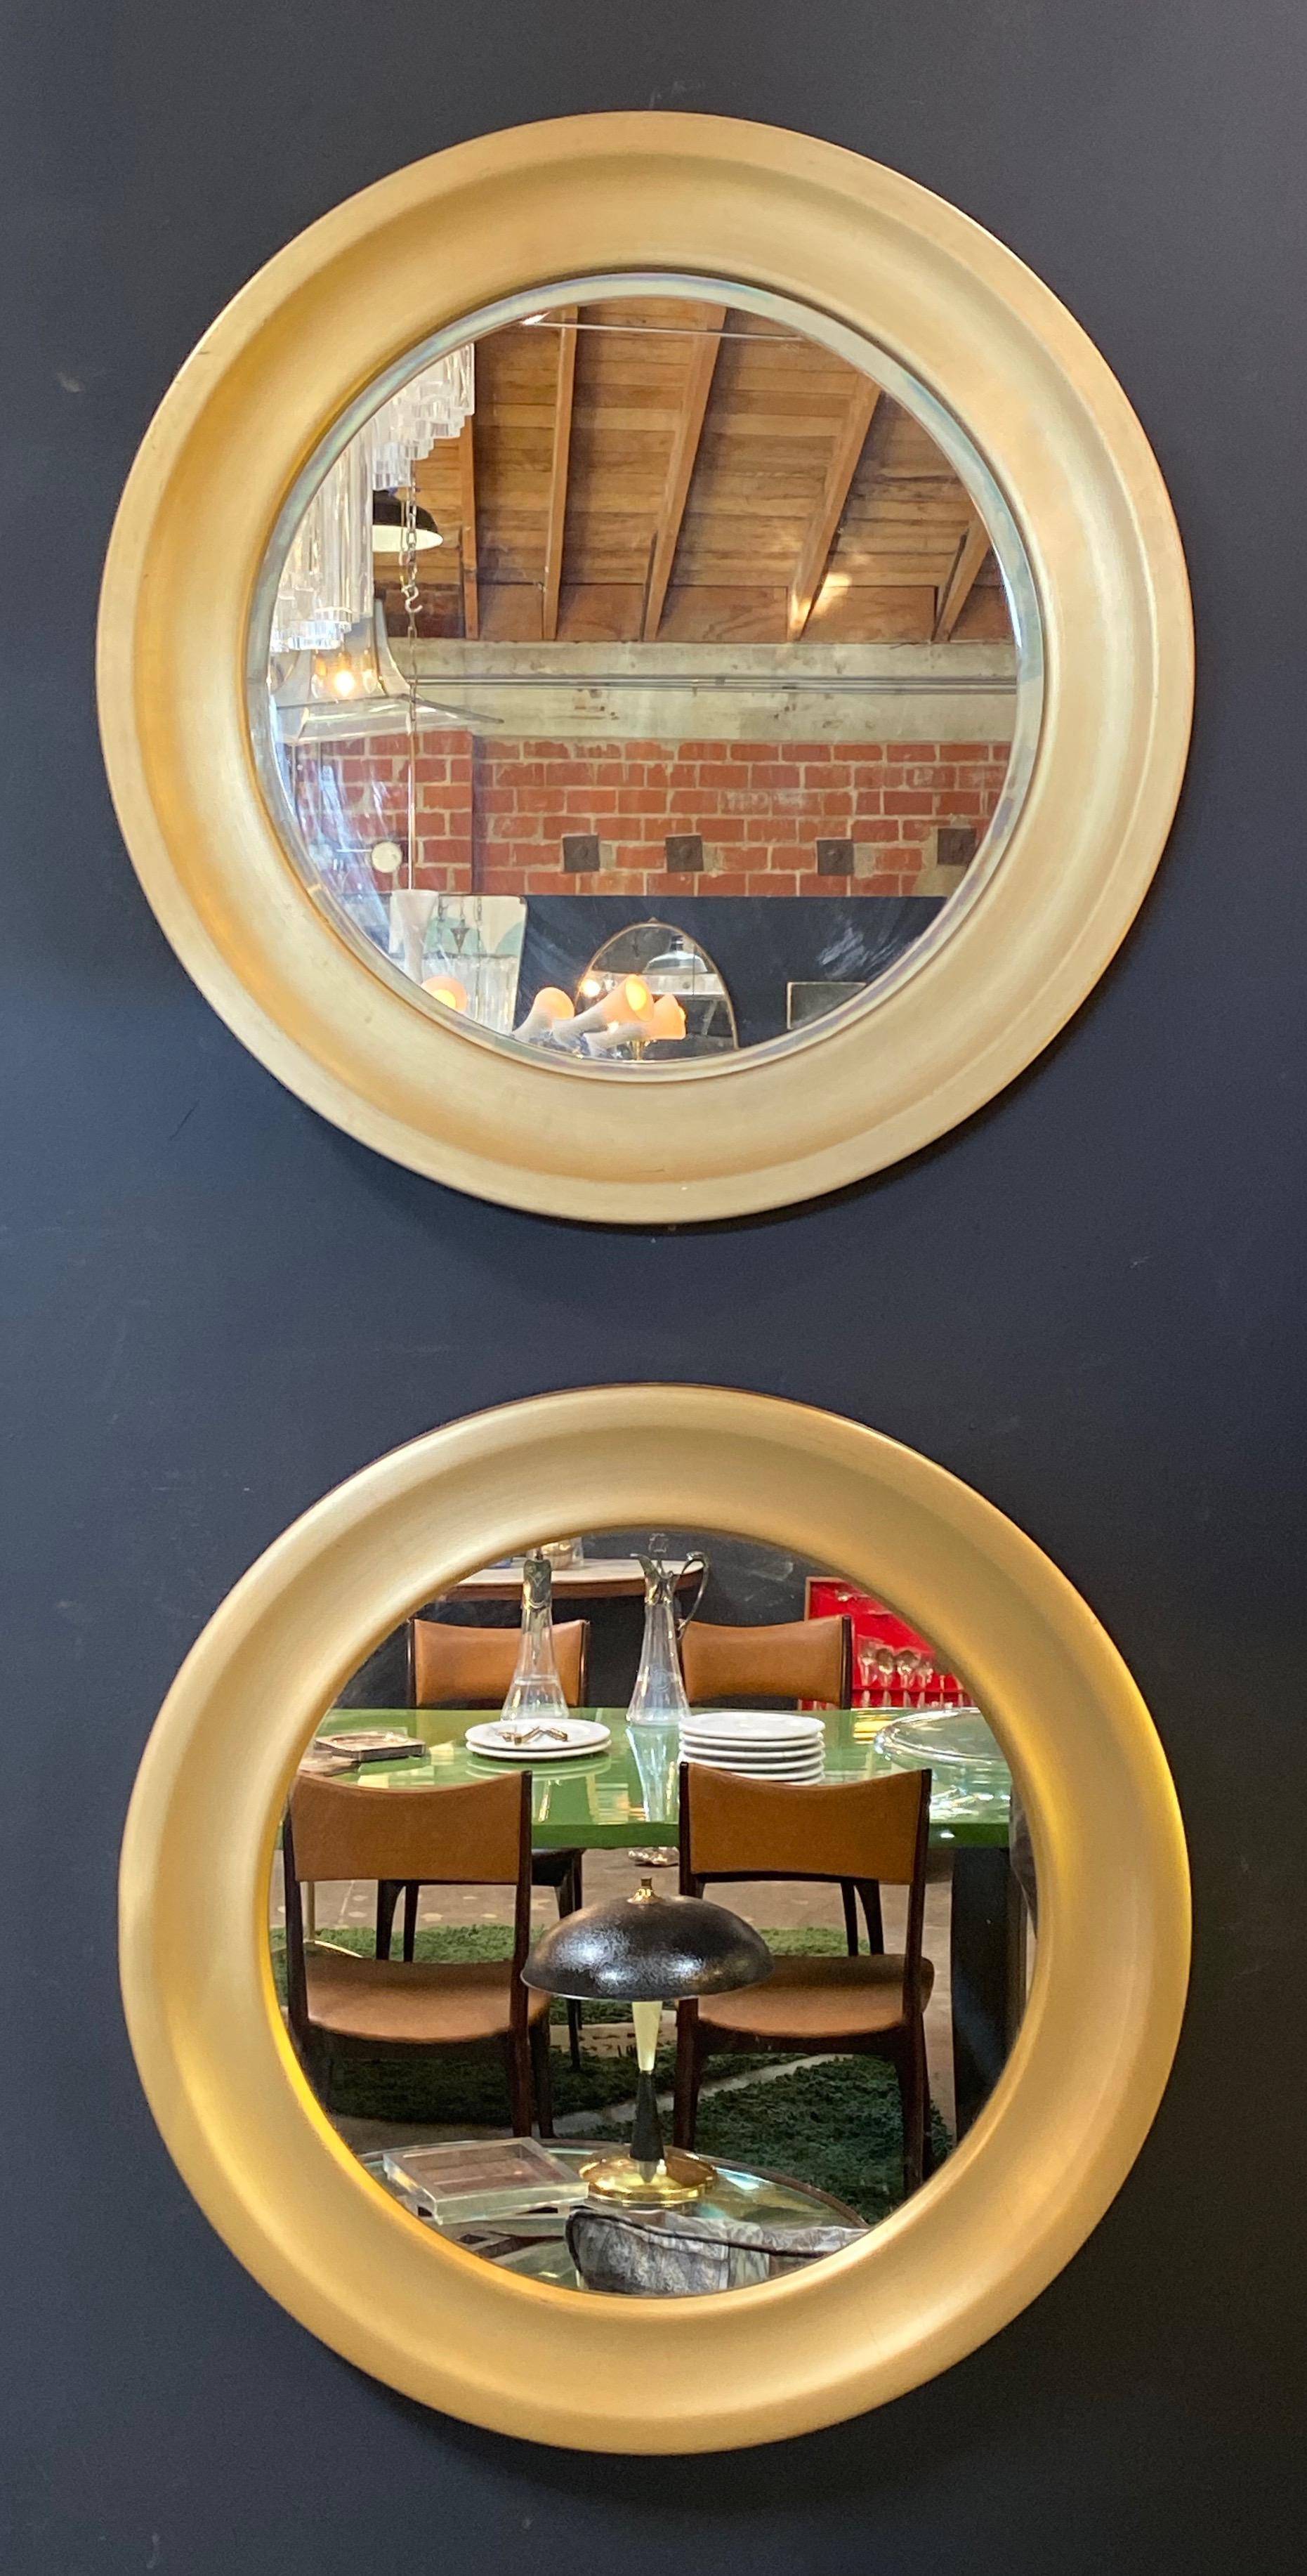 Sergio Mazza round mirrors Golden aluminum Italian design 1960s satin.
Also sold separately.